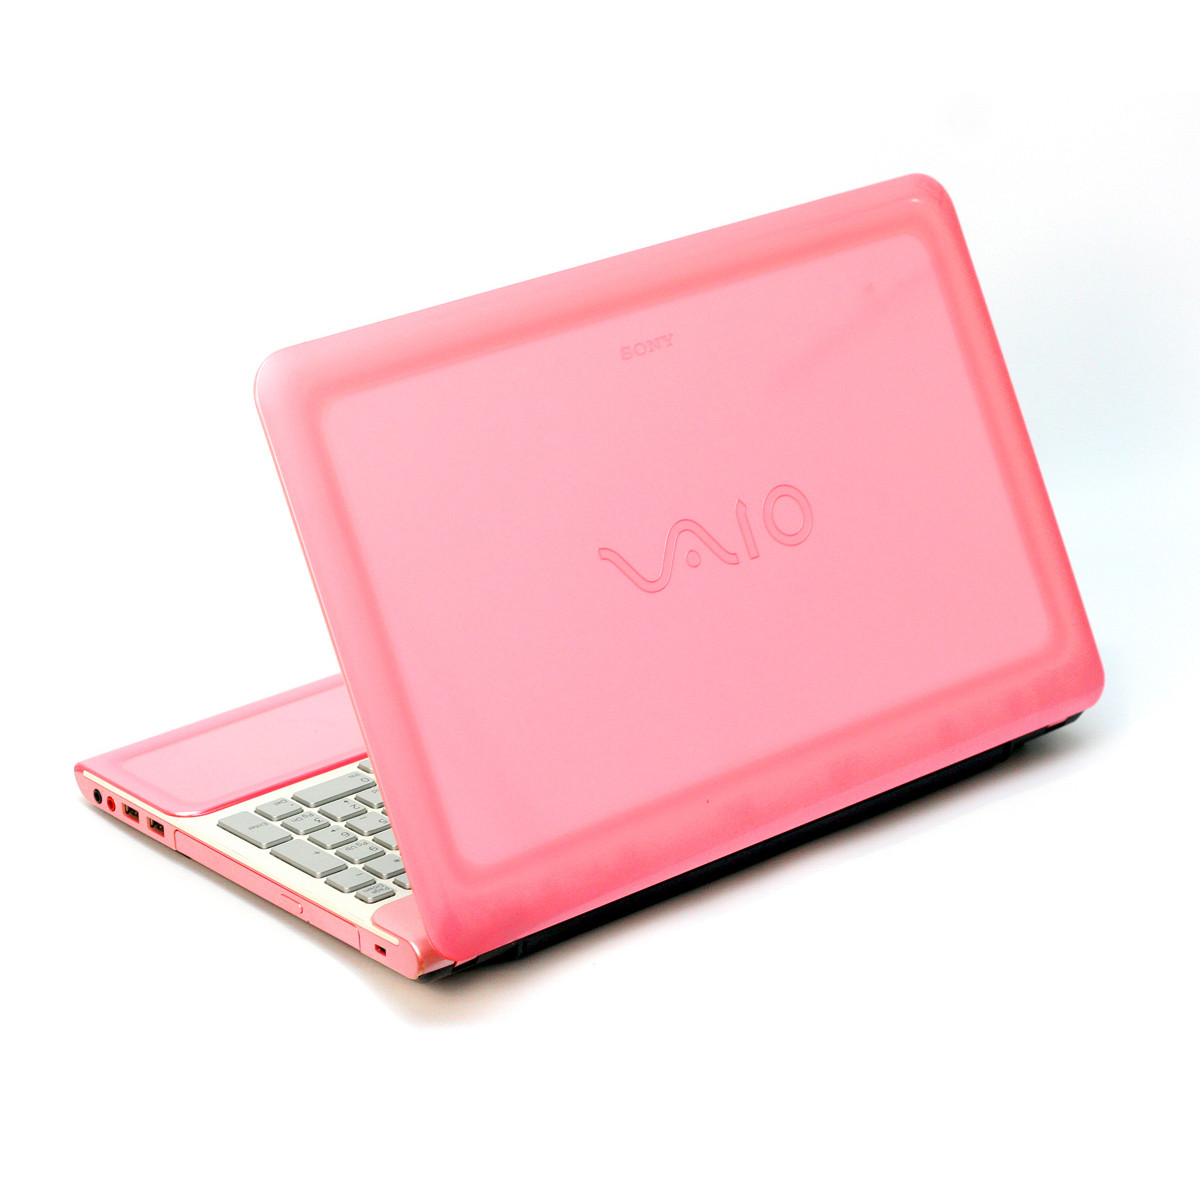 Ноутбук Сони Вайо Розовый Цена